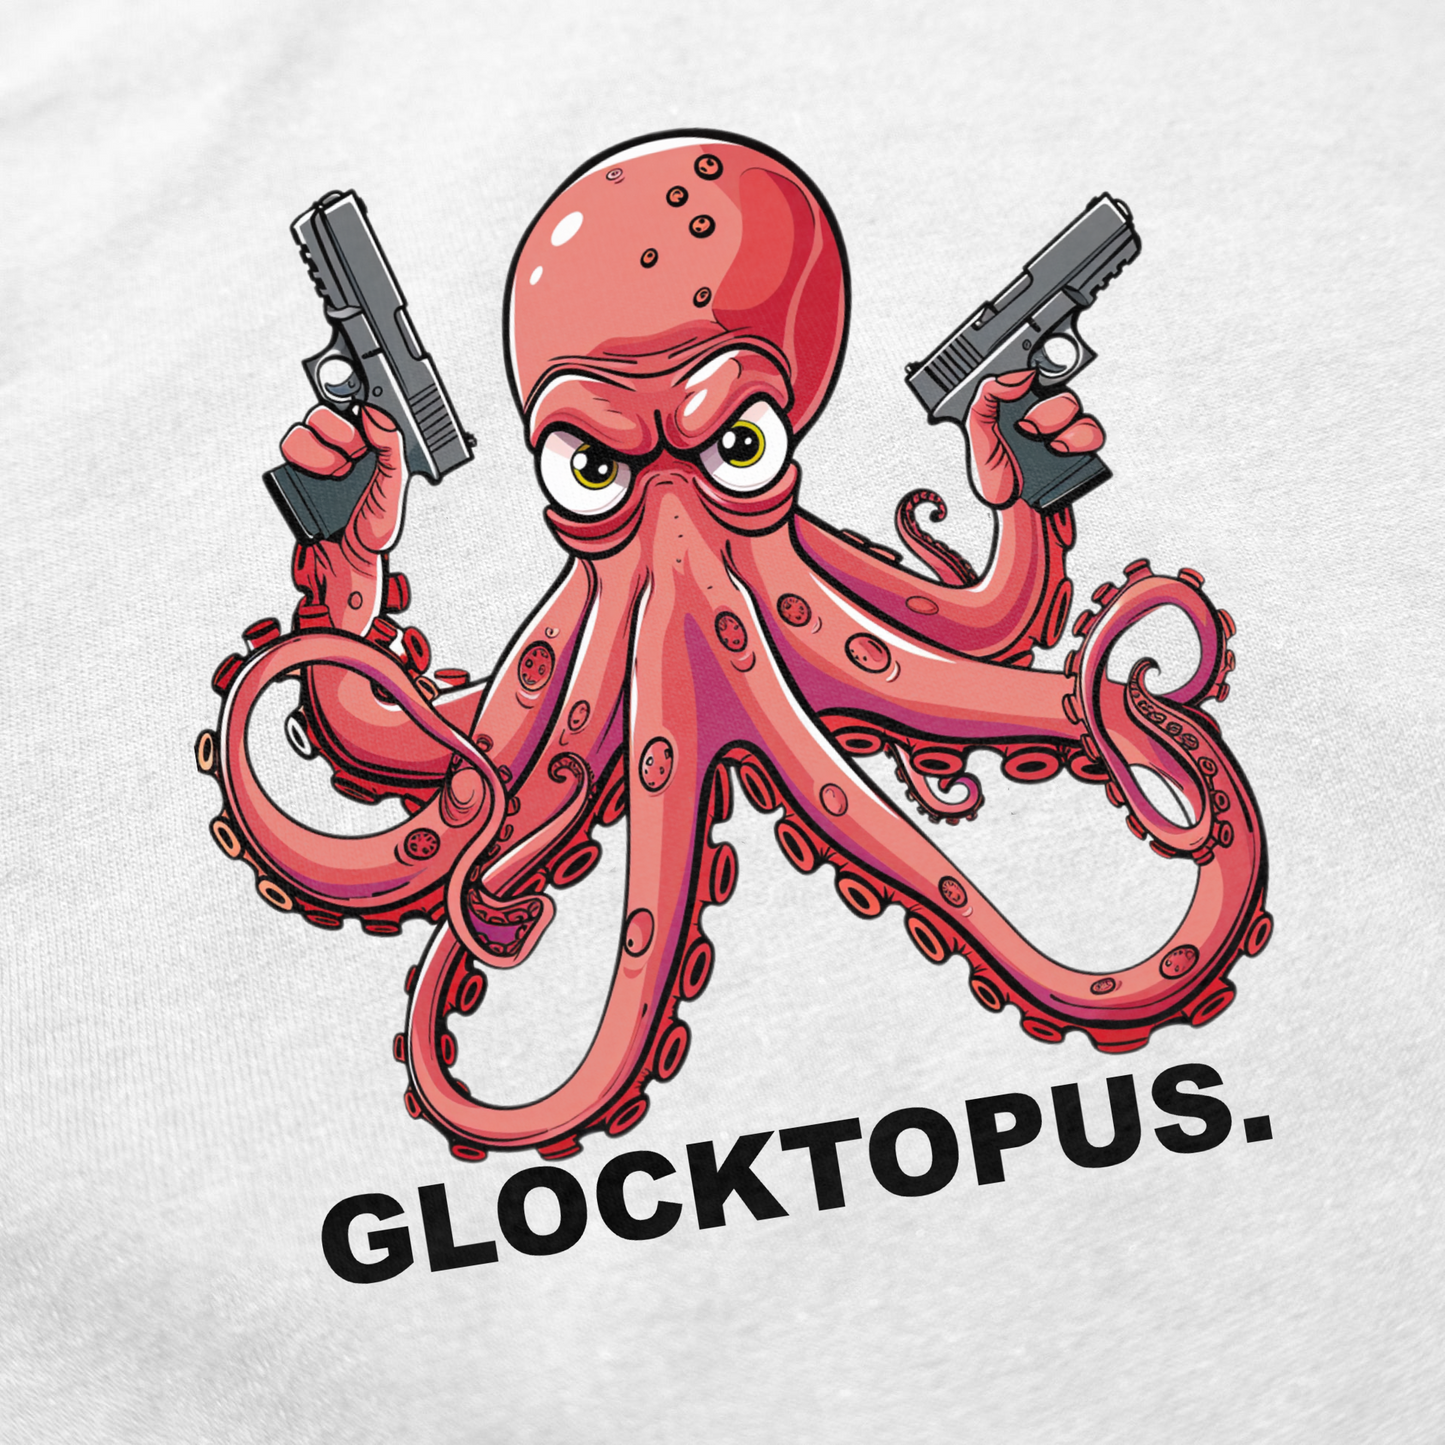 Glocktopus T-Shirt